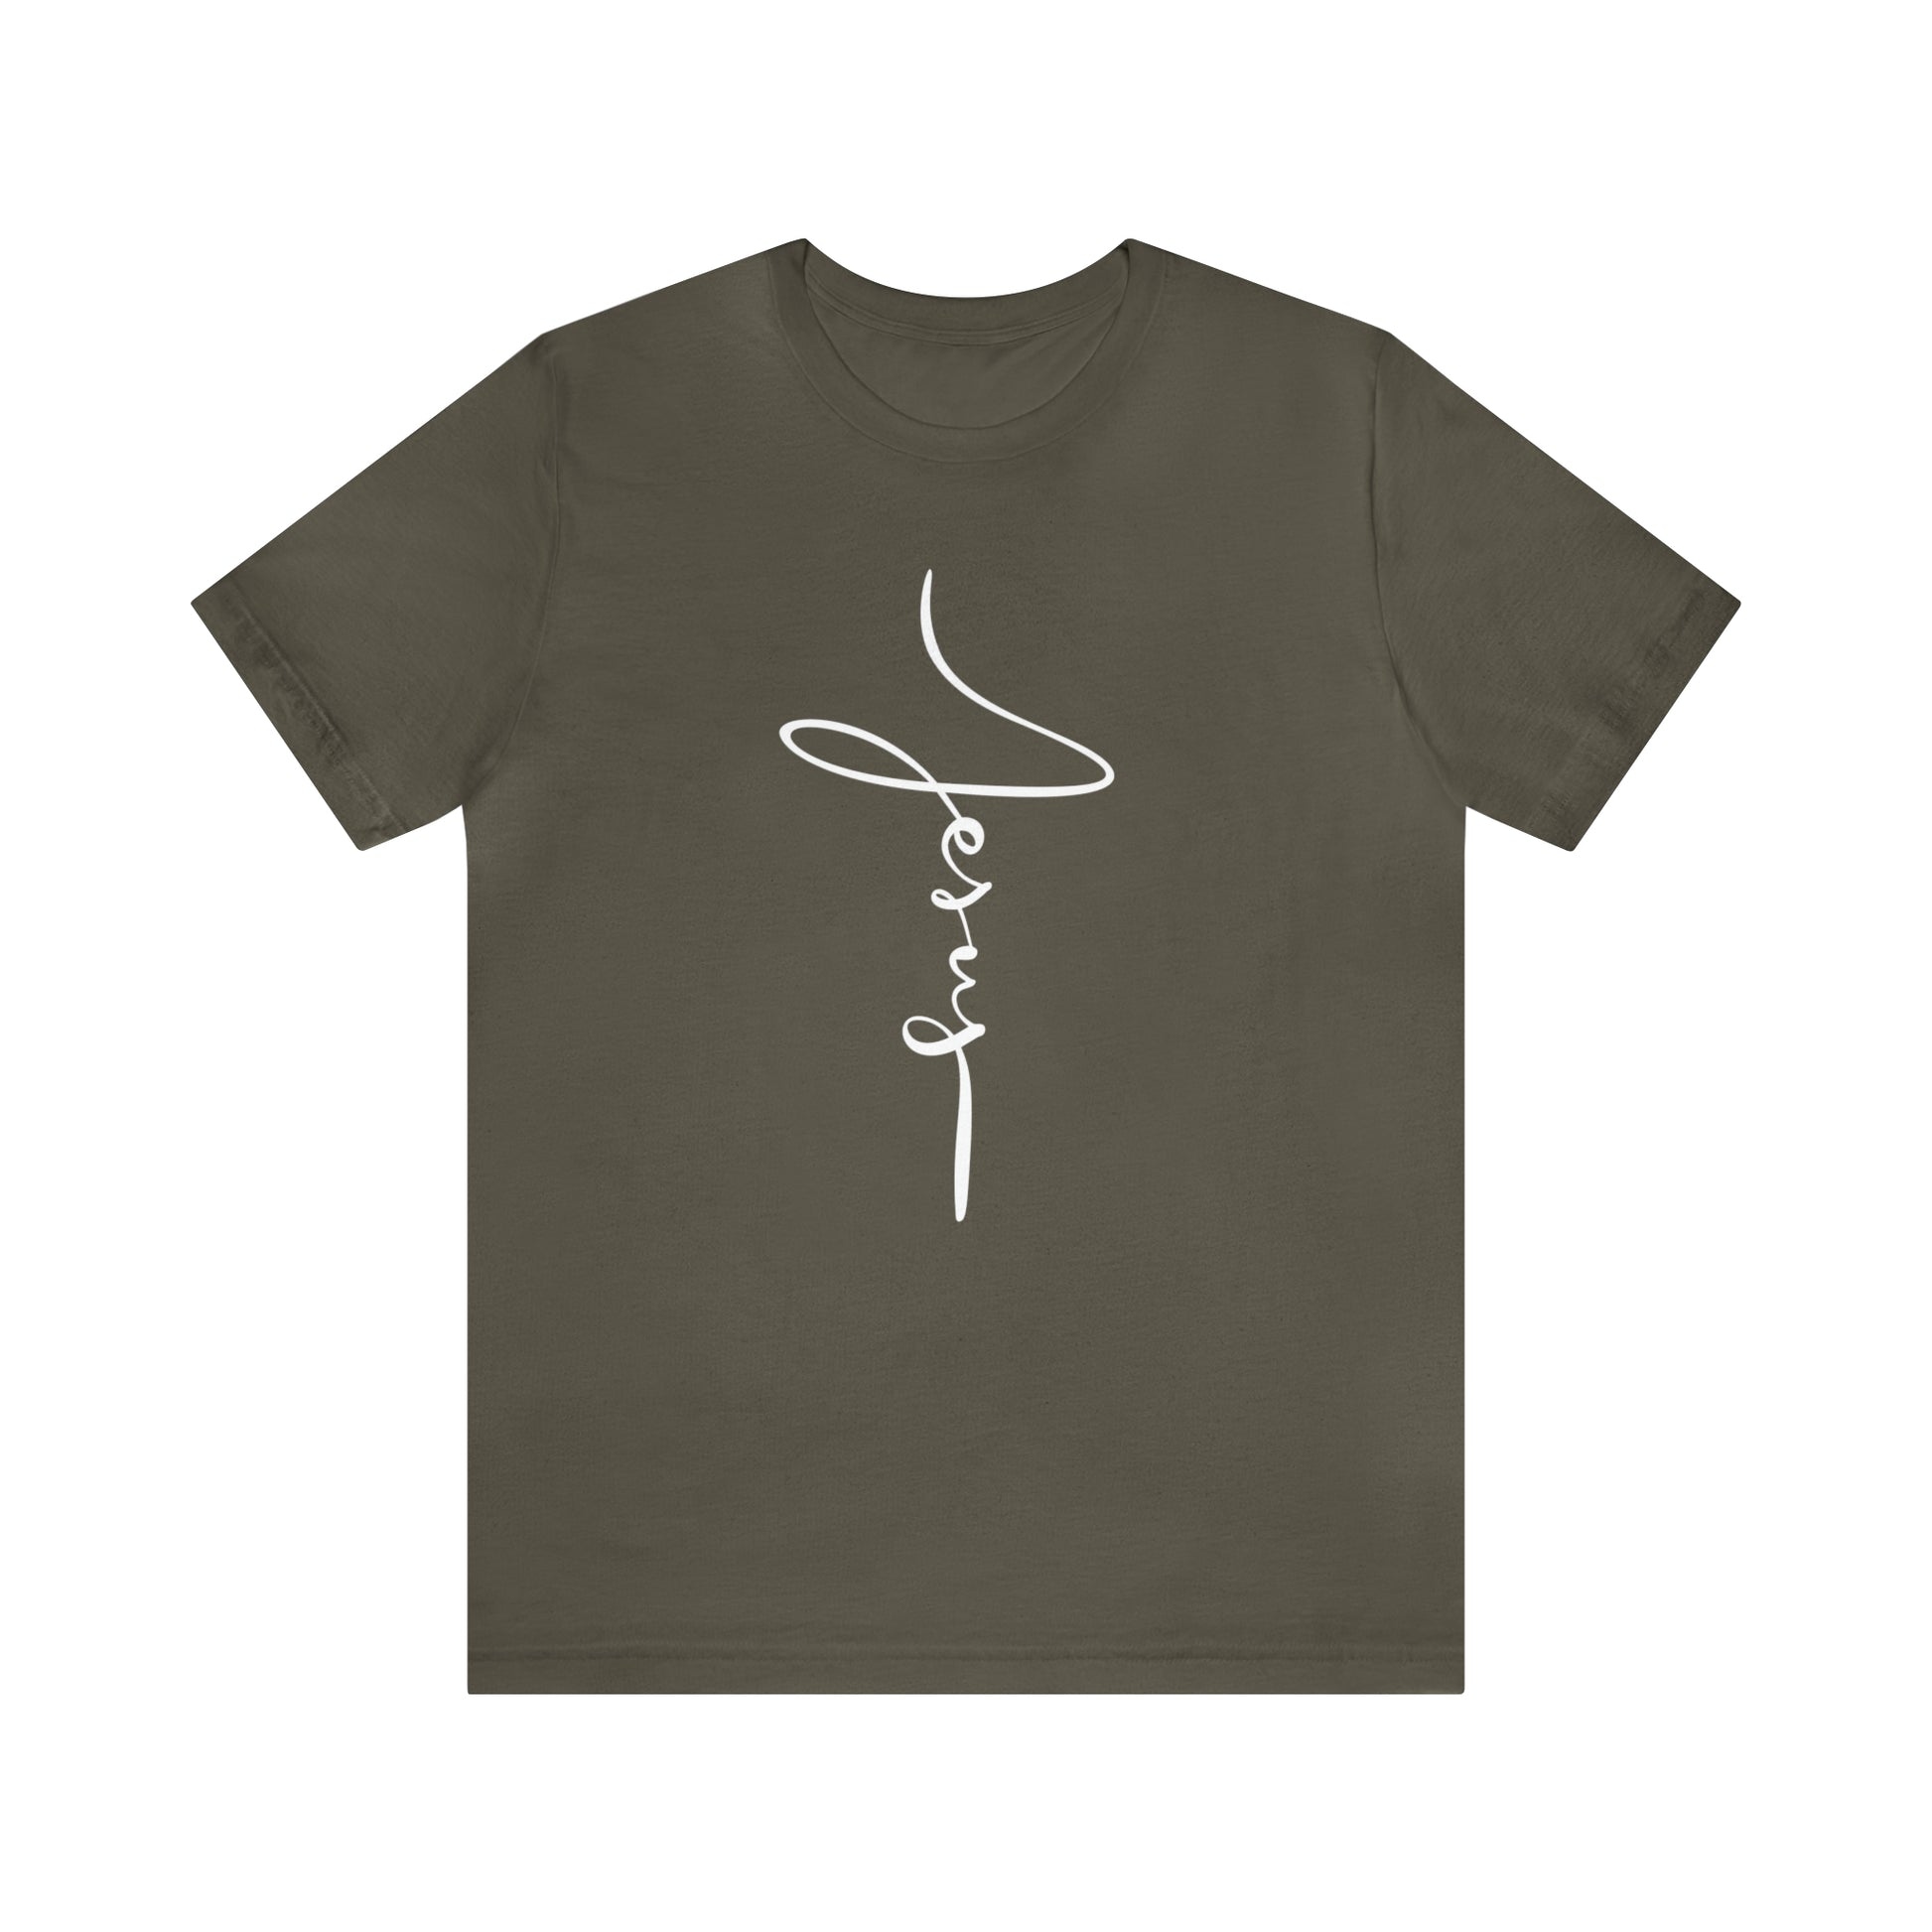 Jesus Cross Christian T-Shirt - Cursive White Font Neutral Color Tees Army mockup